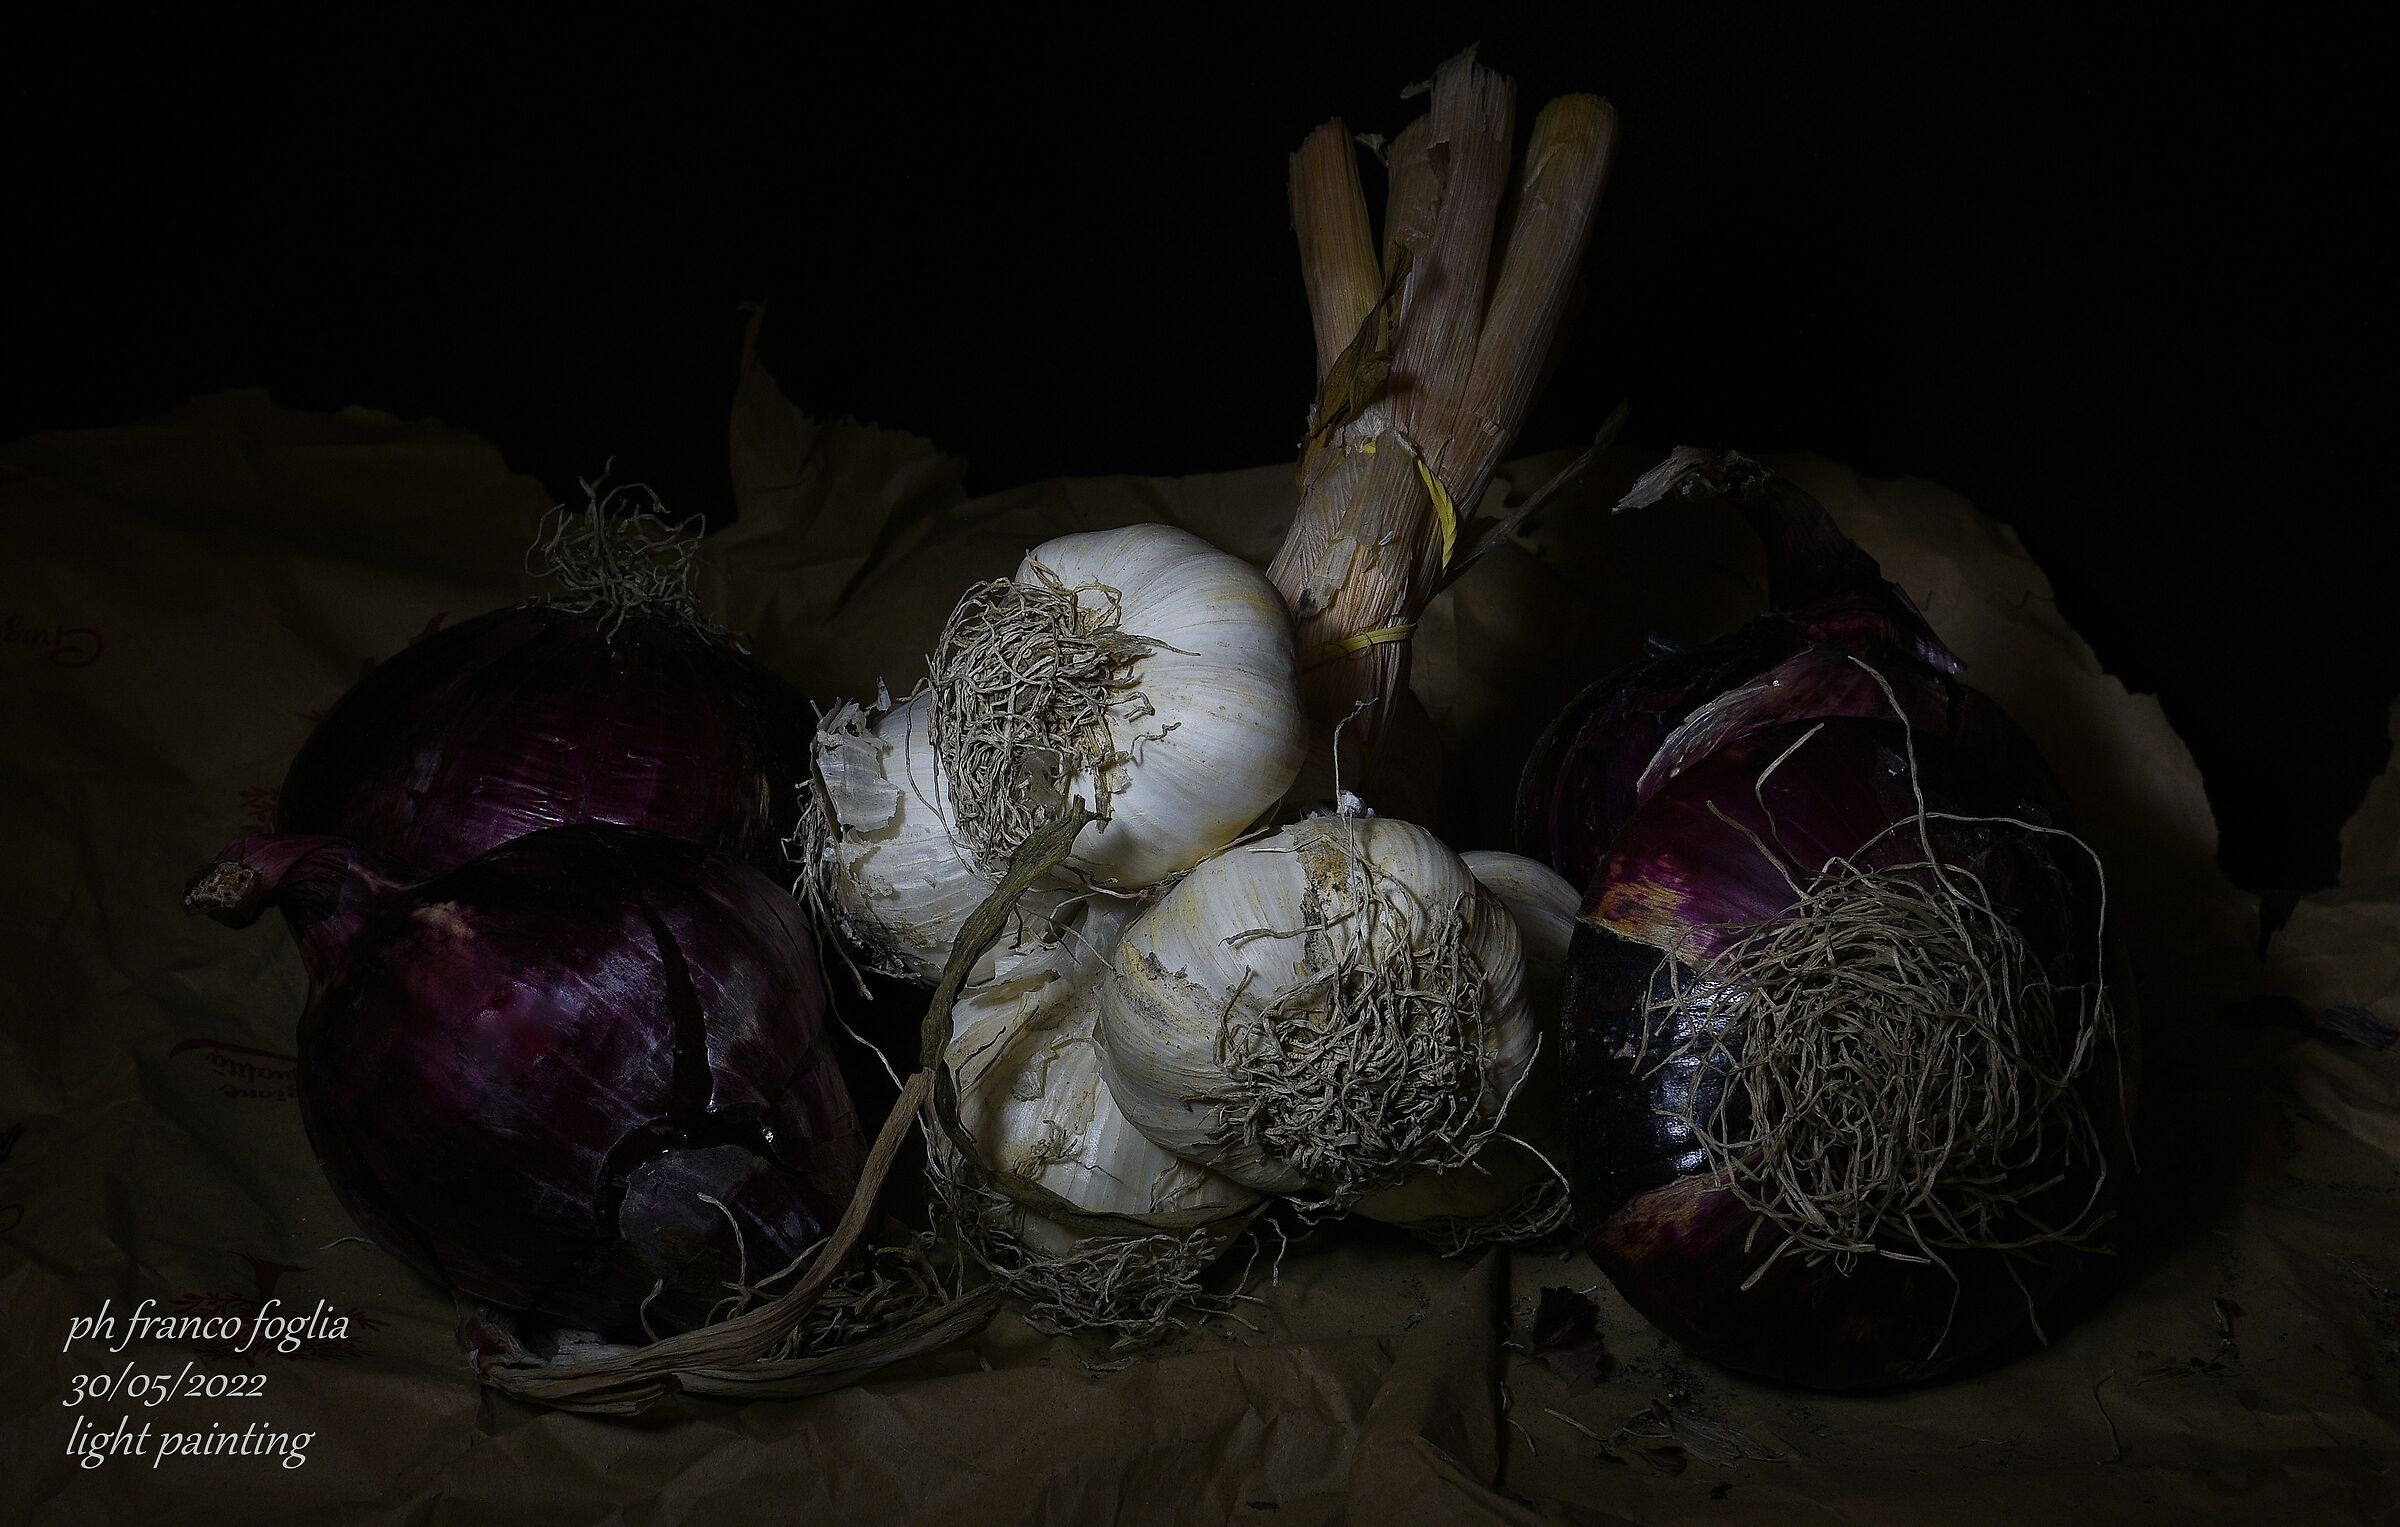 Garlic and Onion...